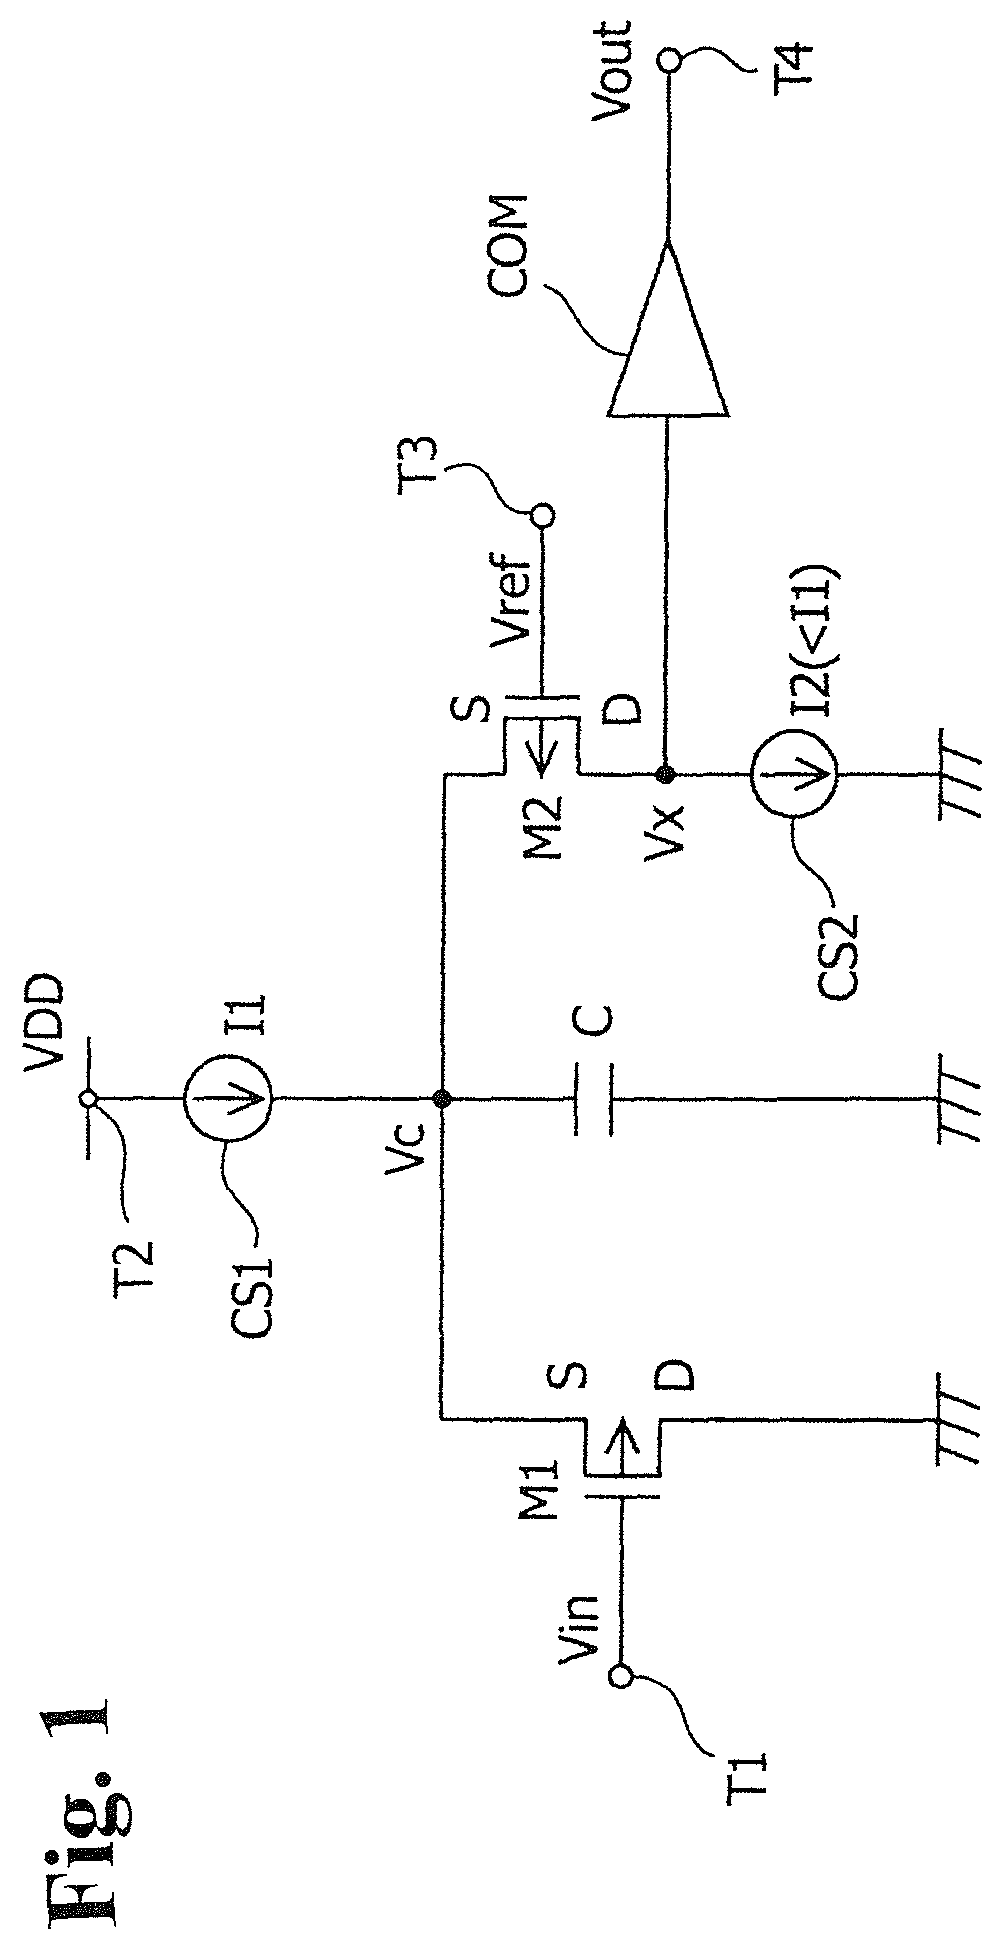 Delay circuit using capacitor as delay element